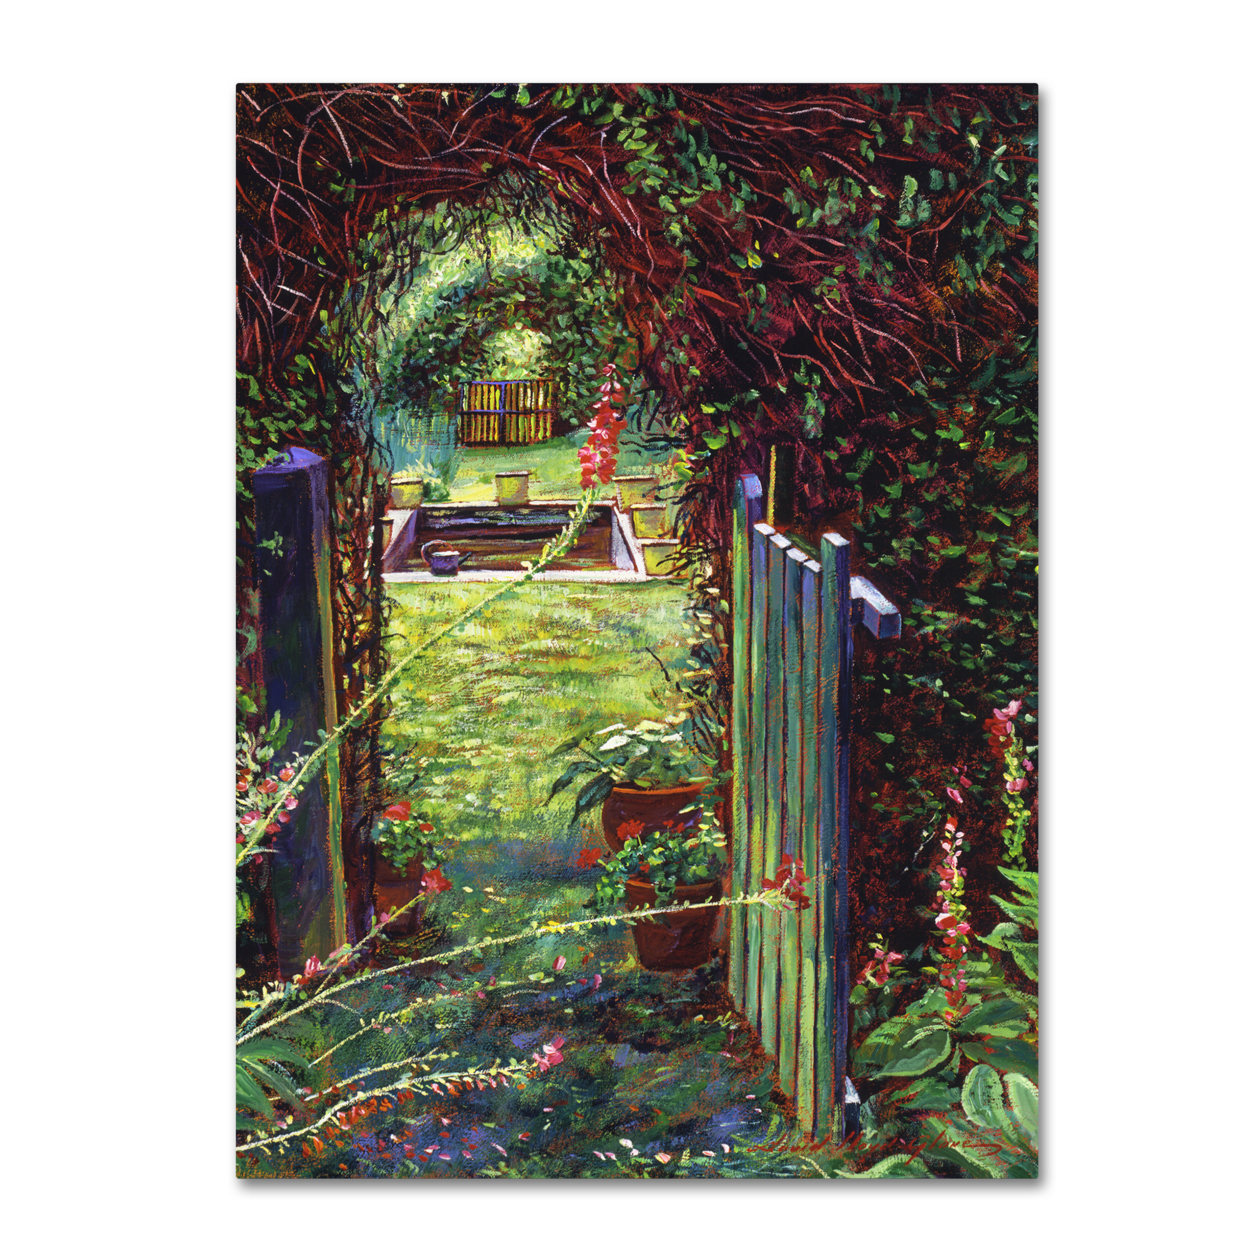 David Lloyd Glover 'Wicket Garden Gate' Canvas Wall Art 35 X 47 Inches